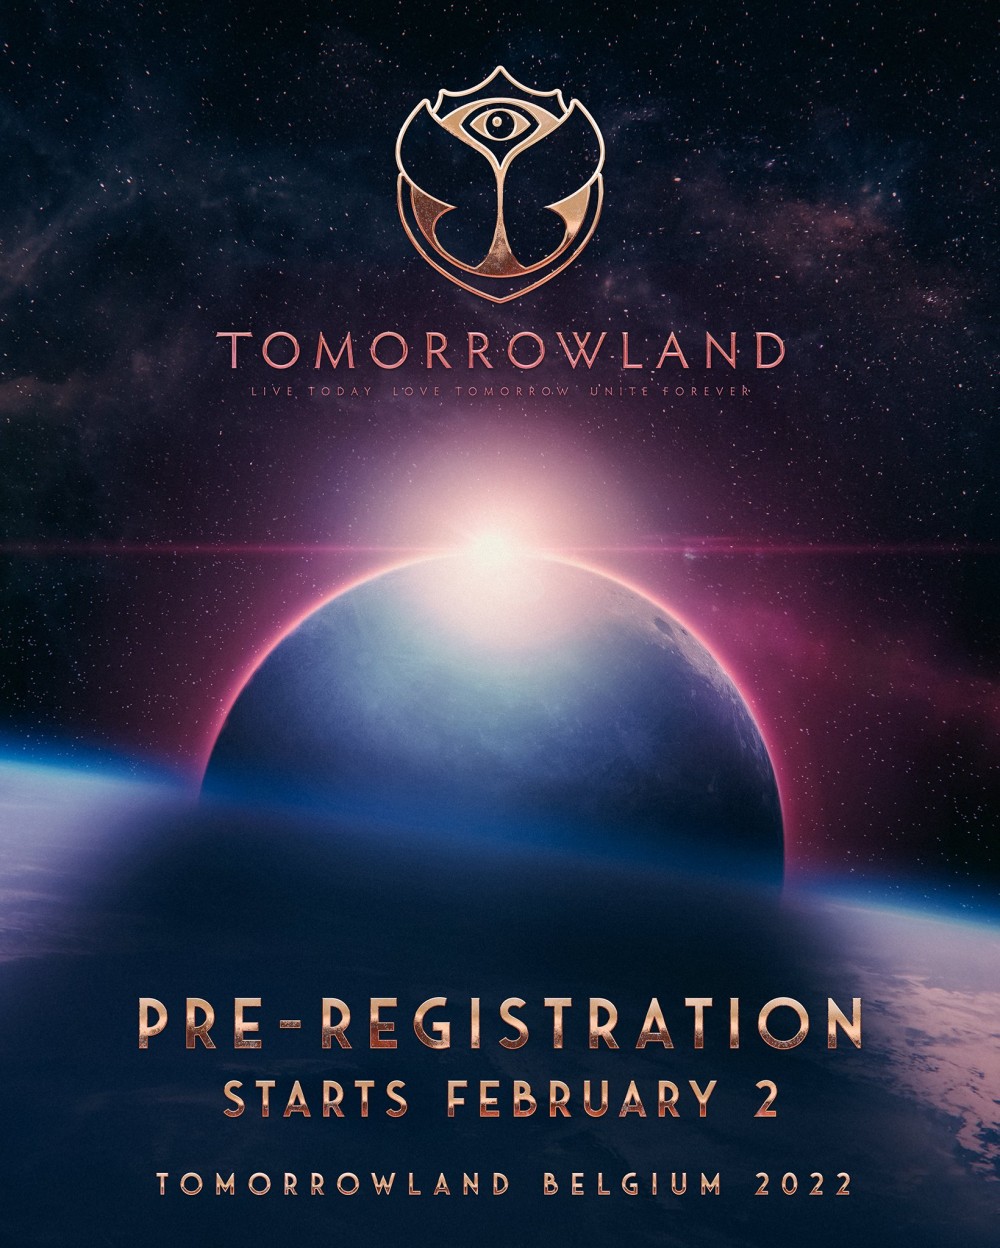 Tomorrowland 2022 pre-registration